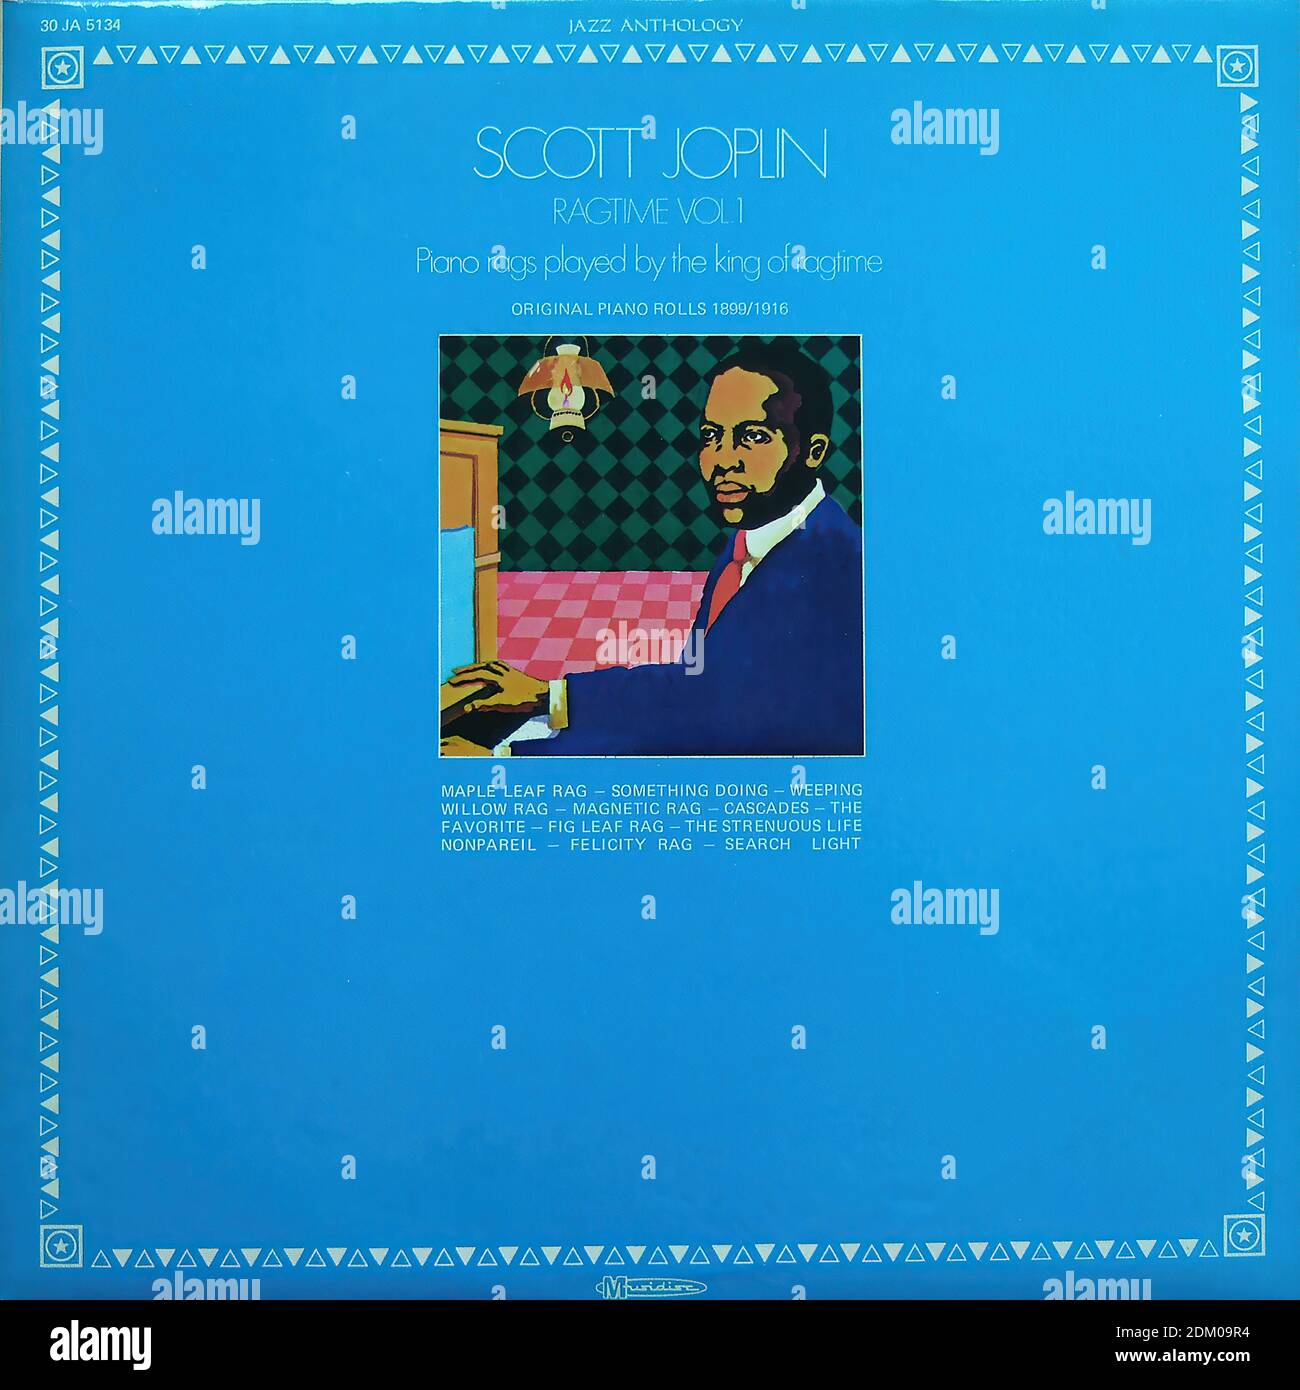 Scott Joplin - Ragtime vol.1 - Piano Rags interpretado por The King of  Ragtime, original Piano Rolls 1899 1916 - Jazz Anthology 30 JA 5134 -  Vintage vinilo album cover Fotografía de stock - Alamy